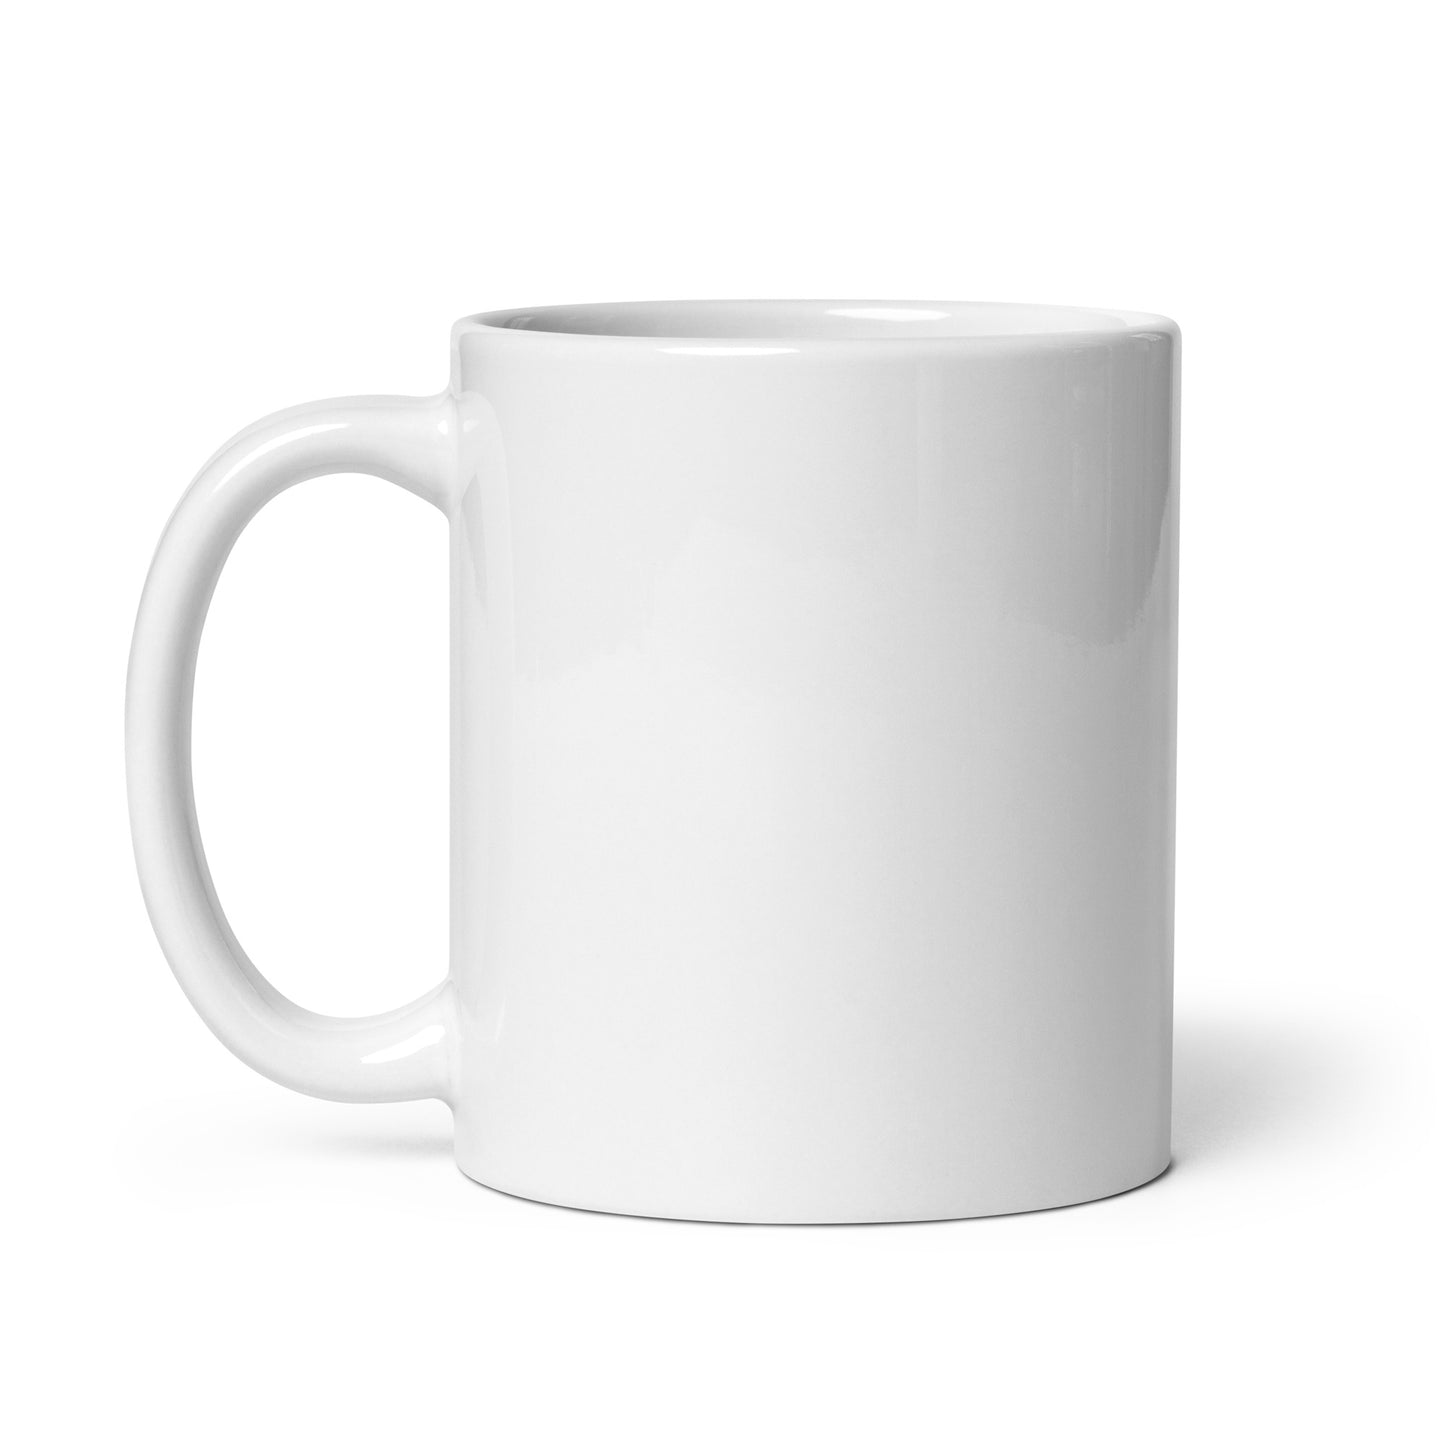 Flurry Hearts-White glossy mug